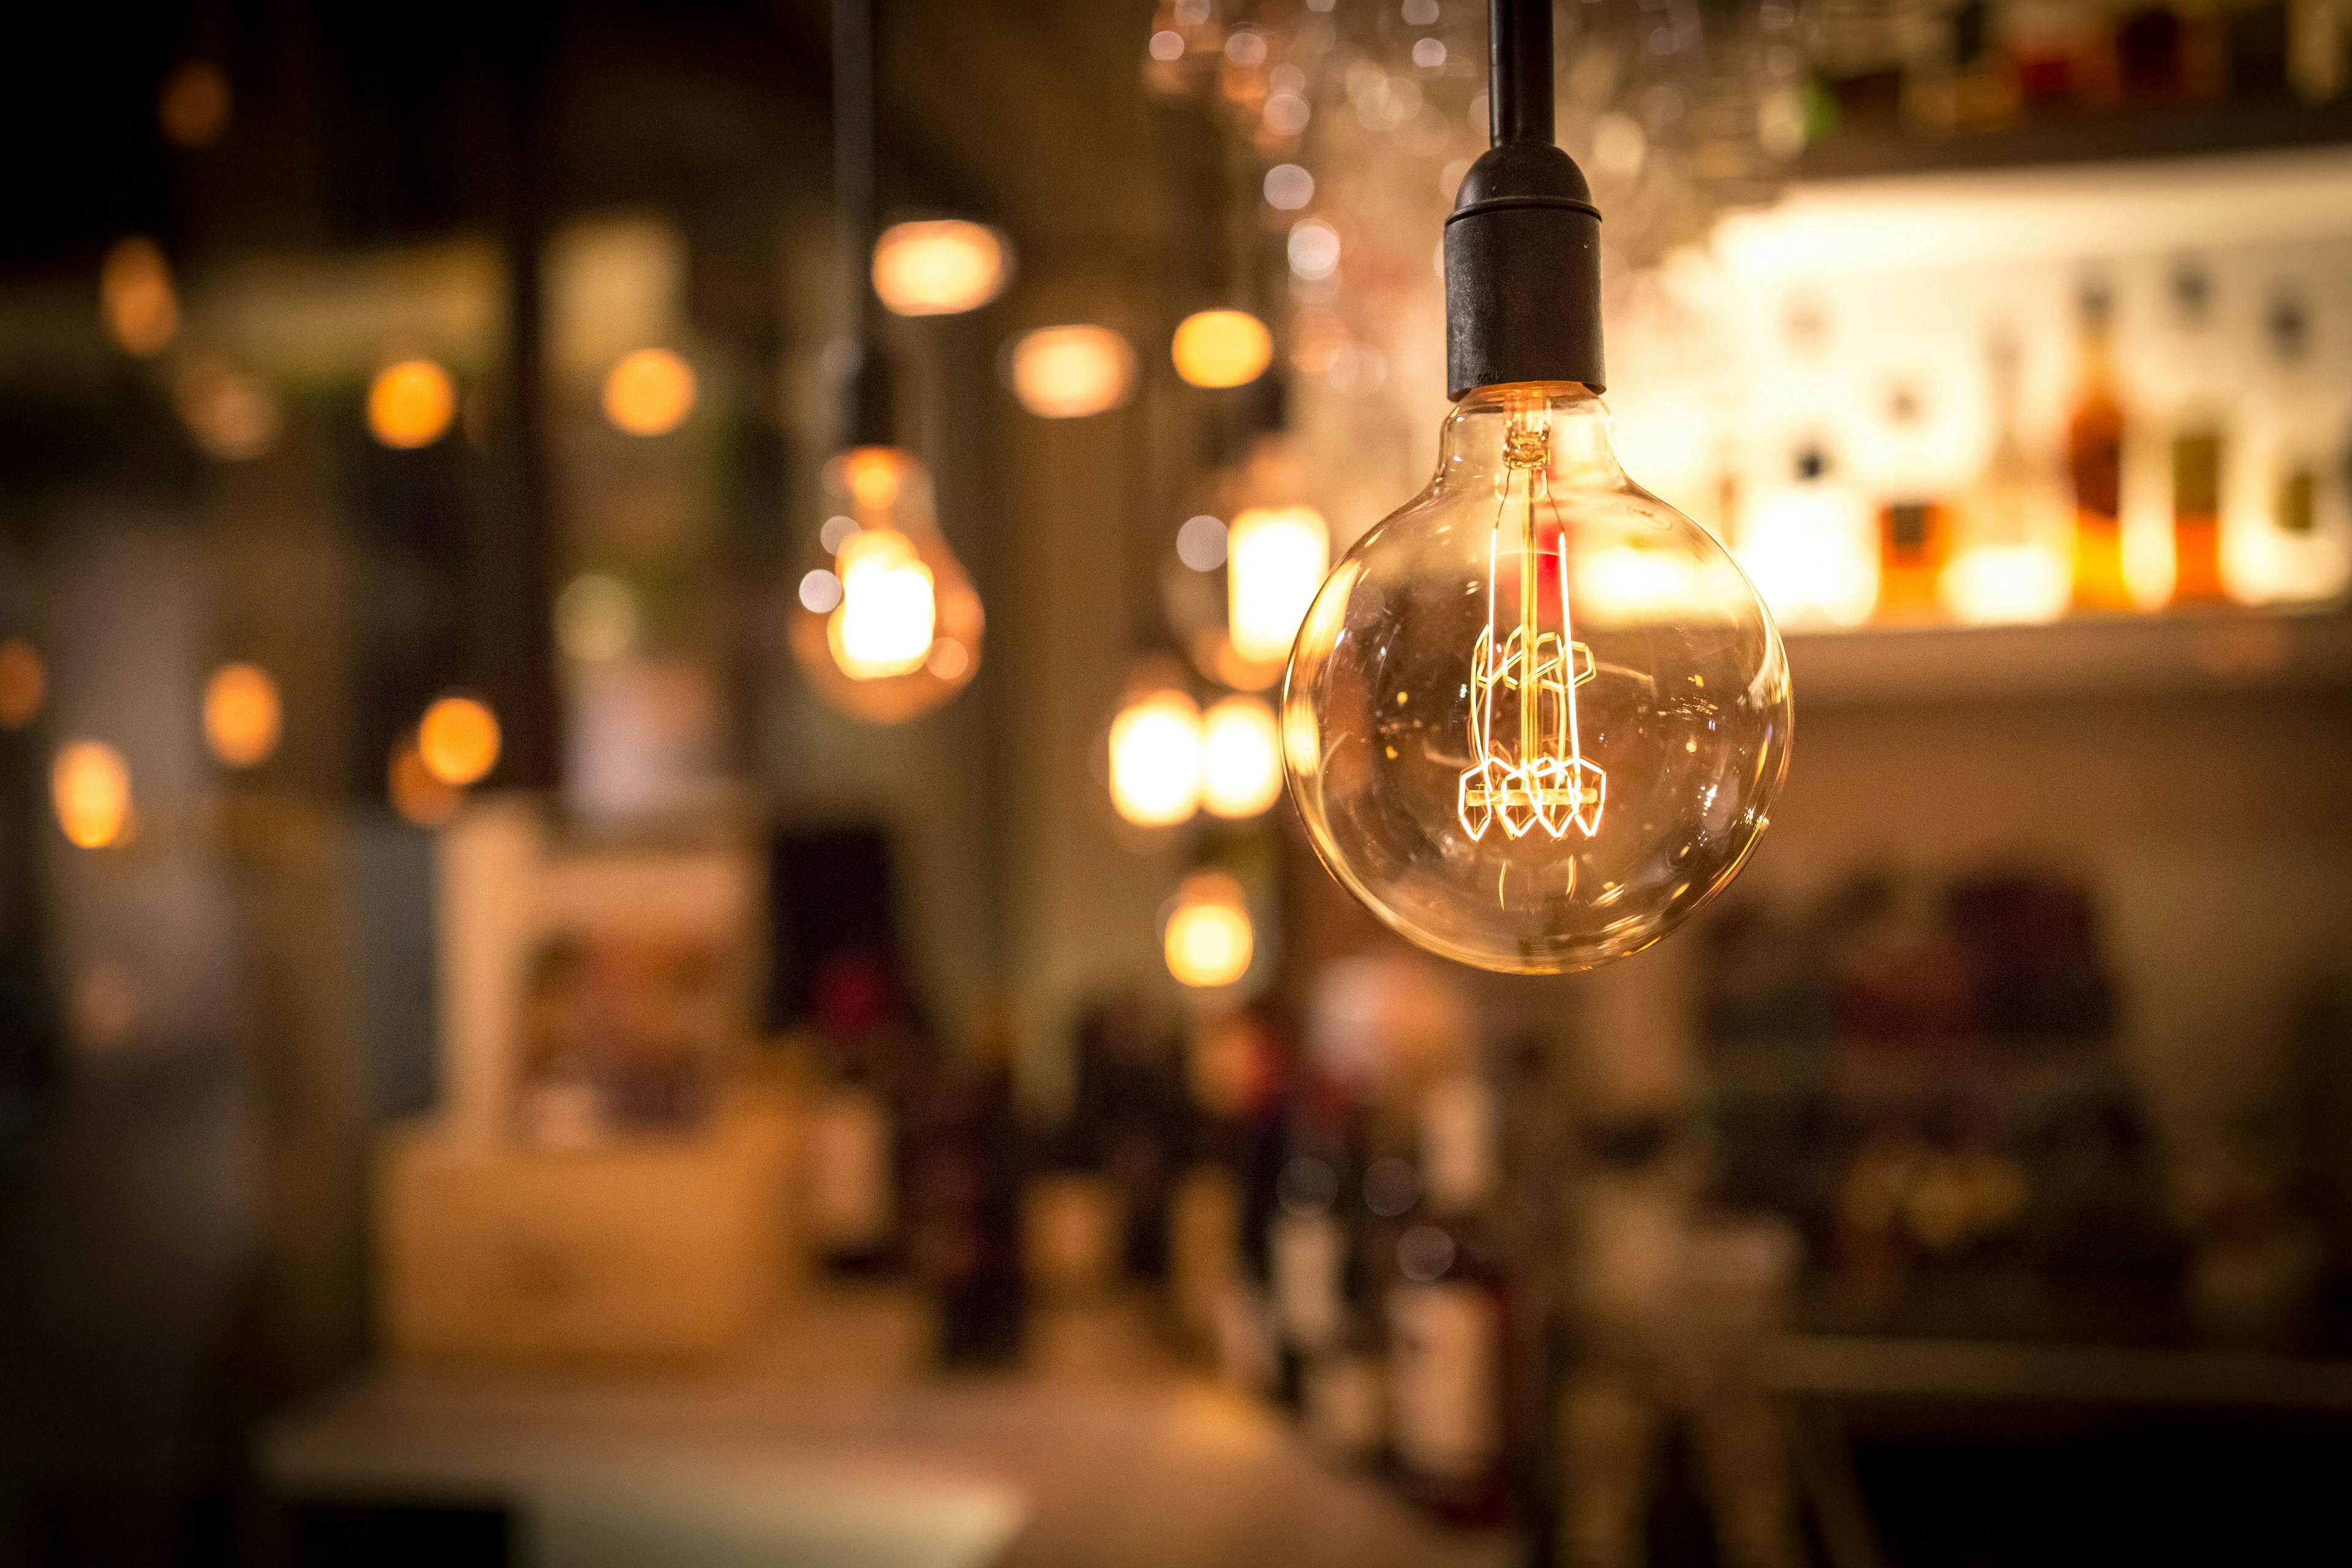 A bar scene captured up close, featuring multiple light bulbs emitting energy-efficient illumination, promoting energy-saving tips for restaurants.